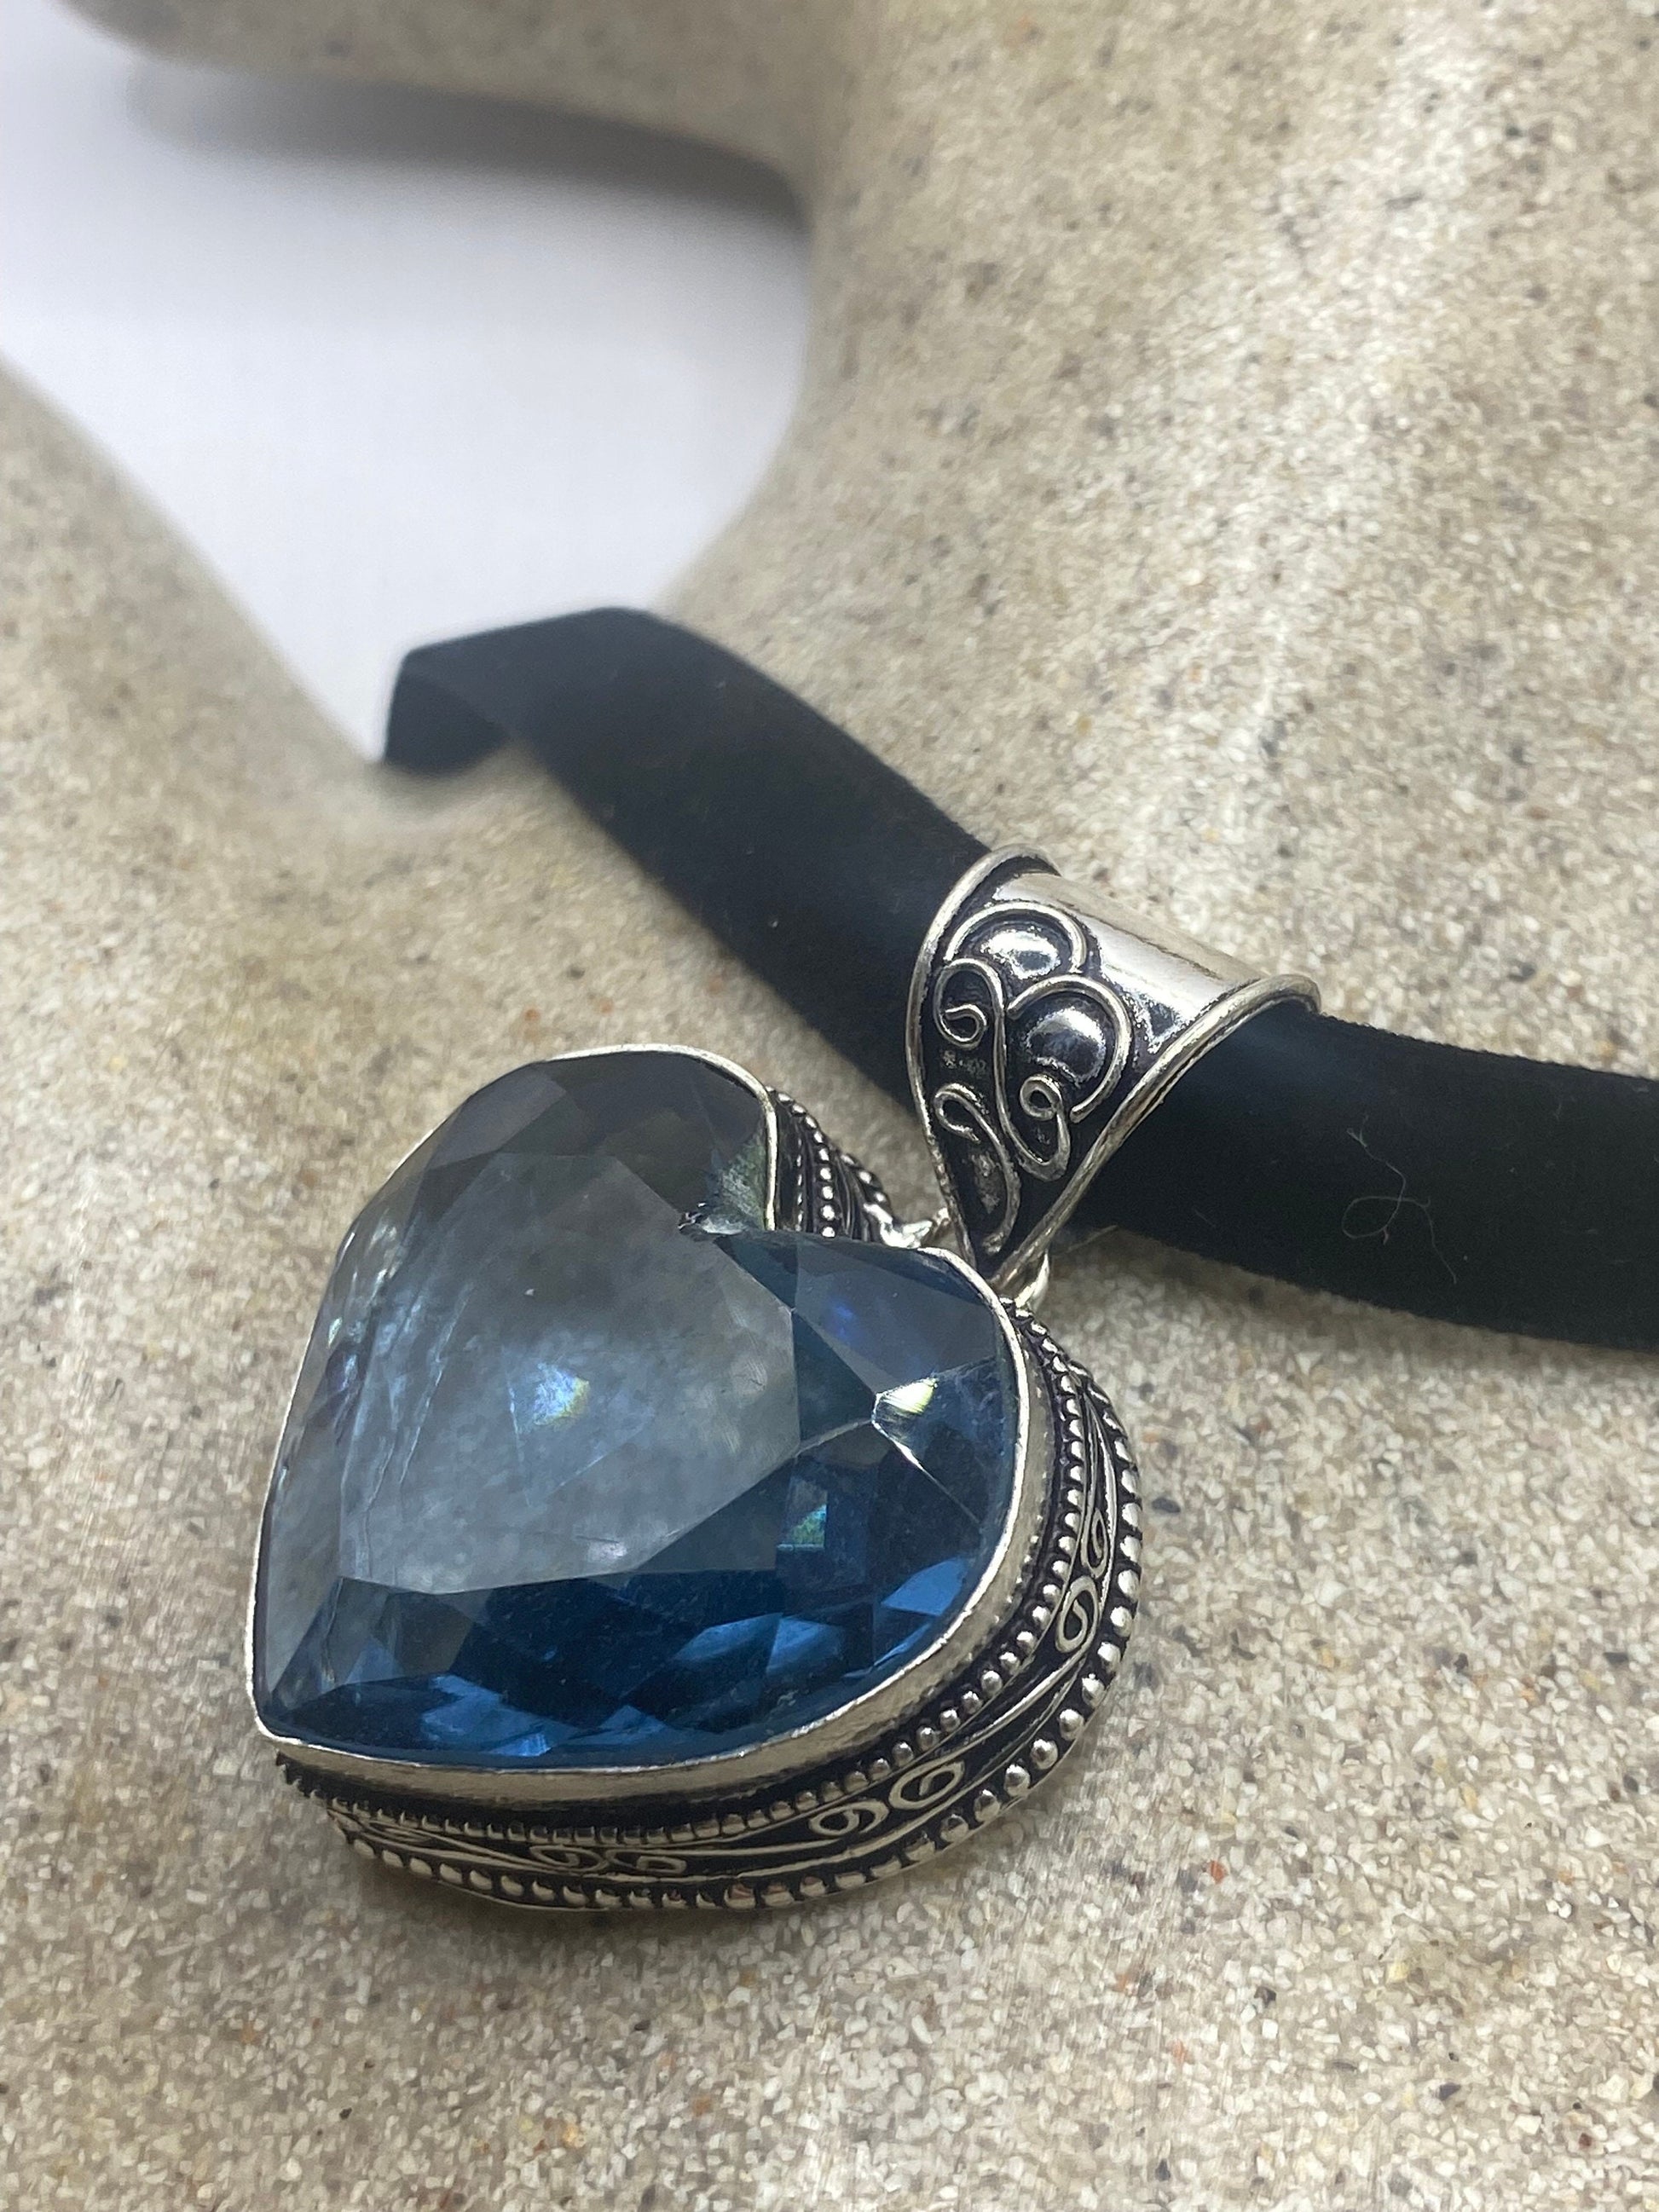 Vintage Blue Glass Heart Antique Black Velvet Ribbon Choker Necklace